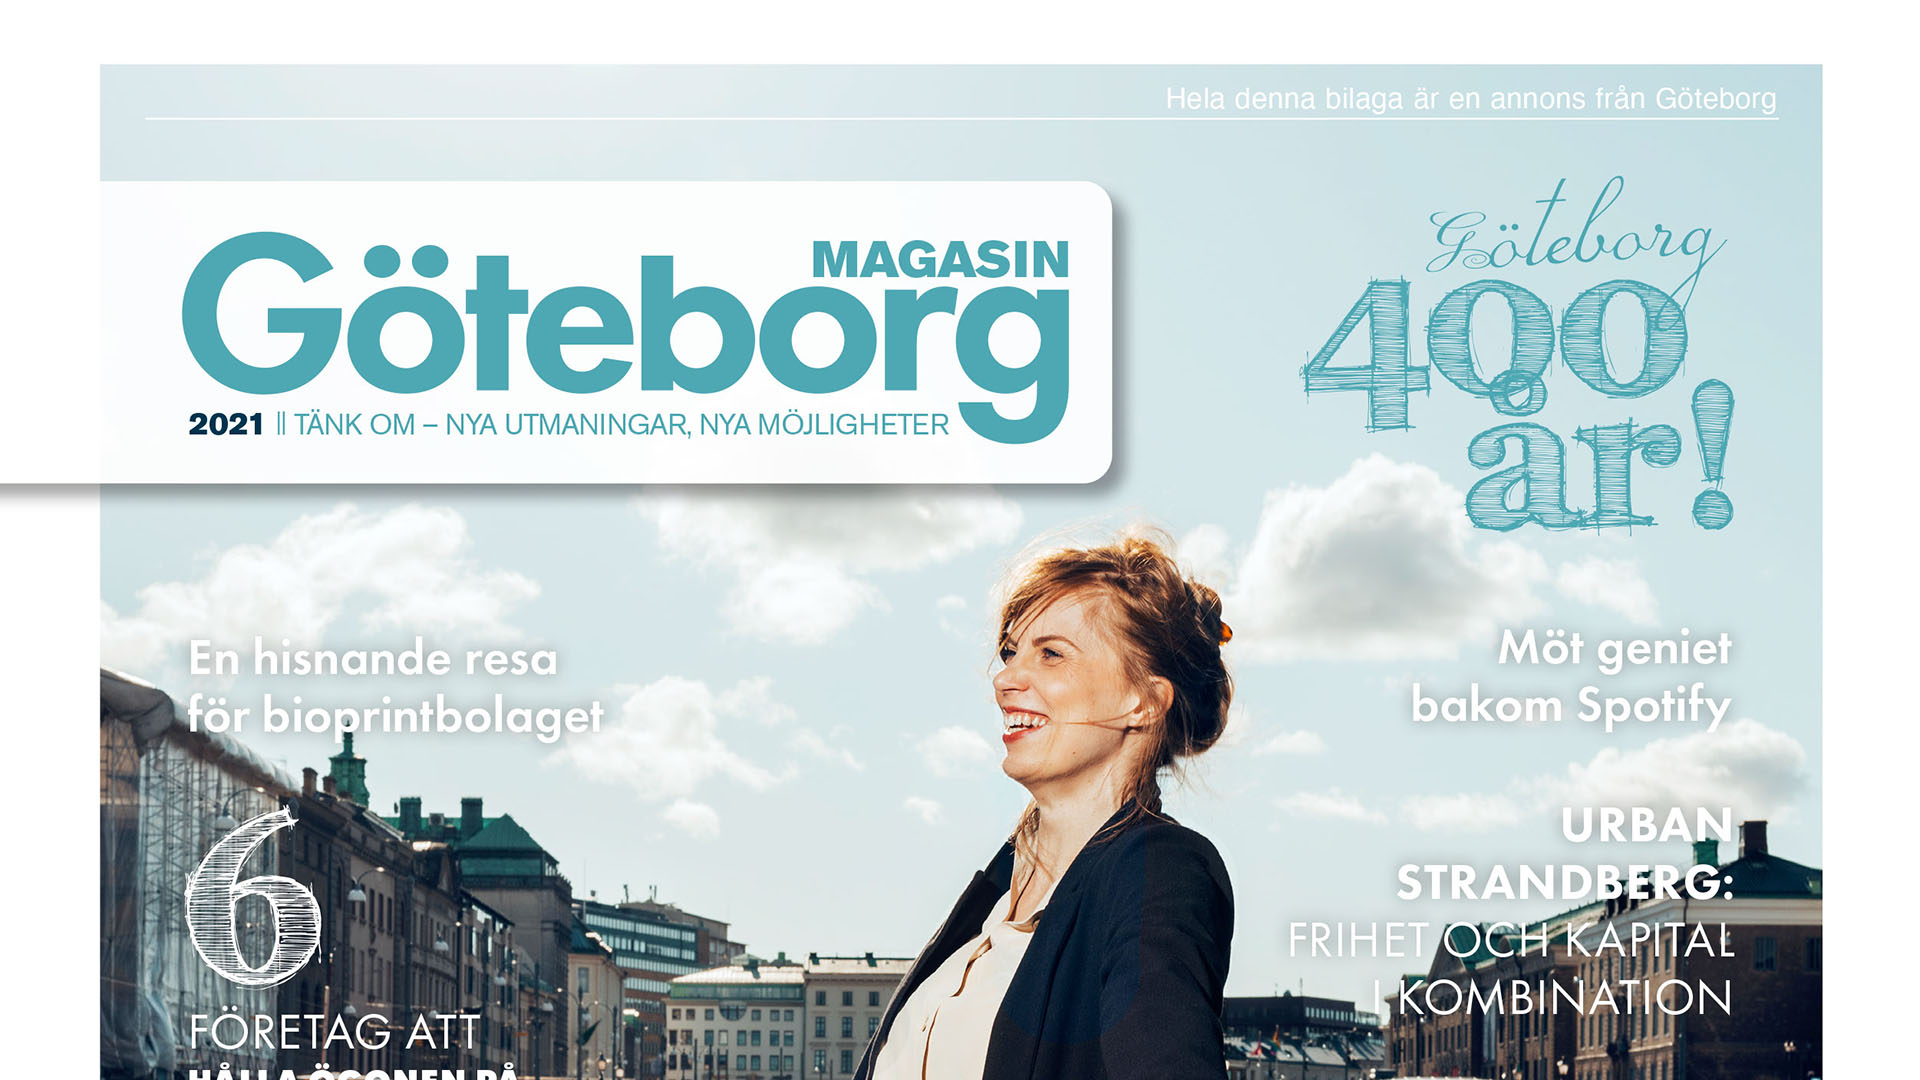 Magasin Göteborg - framsidan